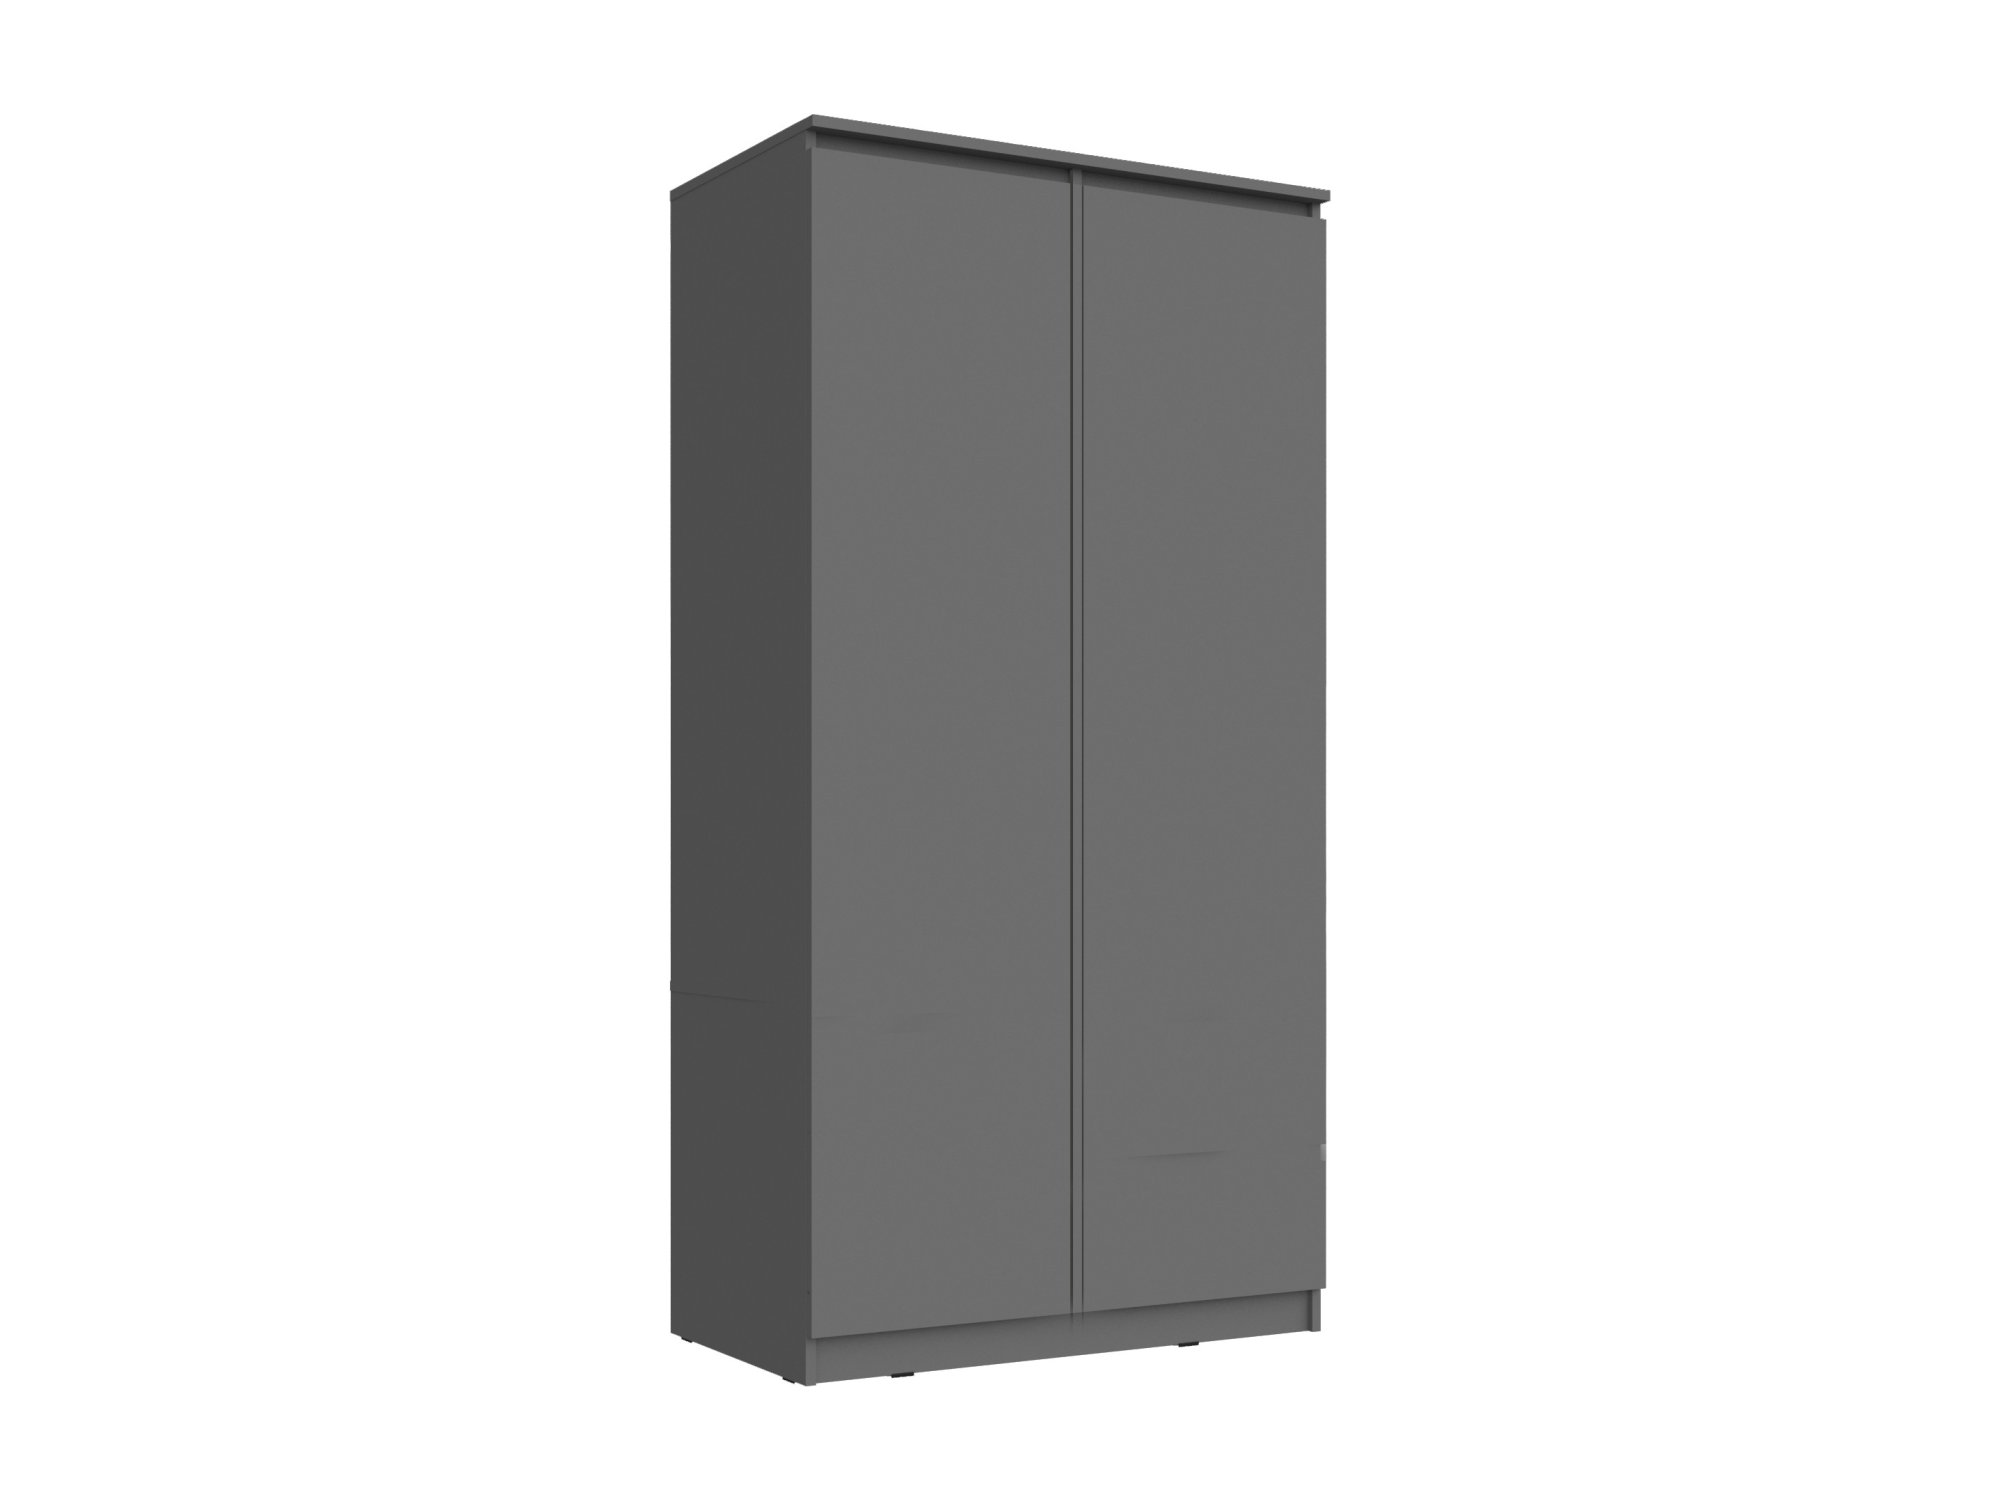 Челси Шкаф 2-х створчатый платяной (Графит, Графит) Графит, Черный, ЛДСП шкаф 3 х створчатый николь бетон графит бежевый коричневый темный мдф лдсп